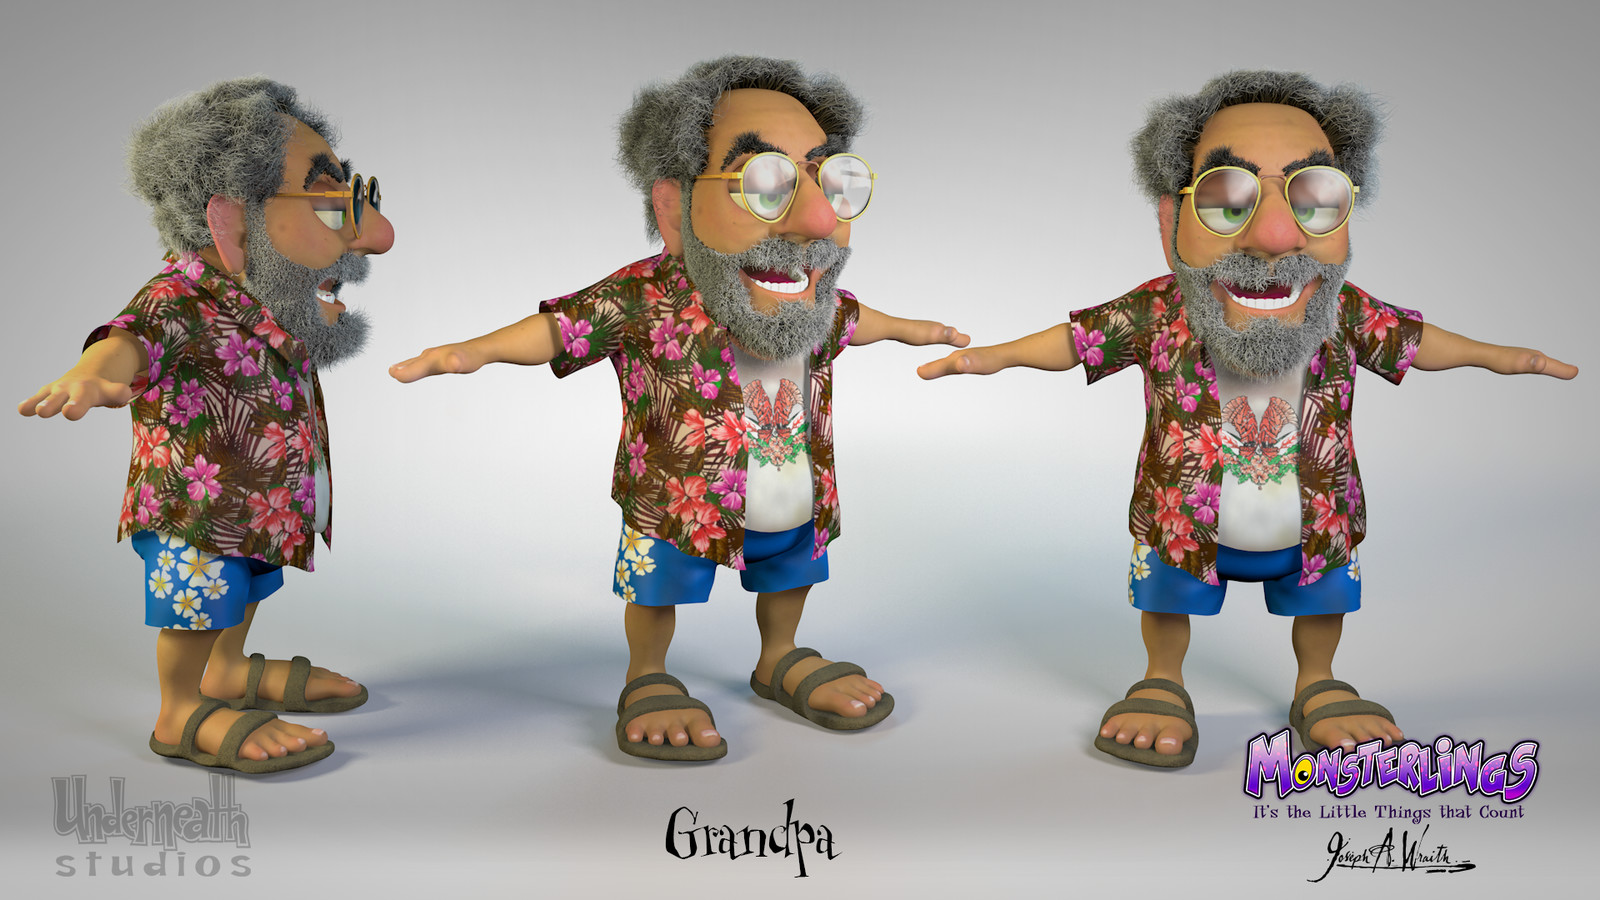 Monsterlings - Grandpa Character